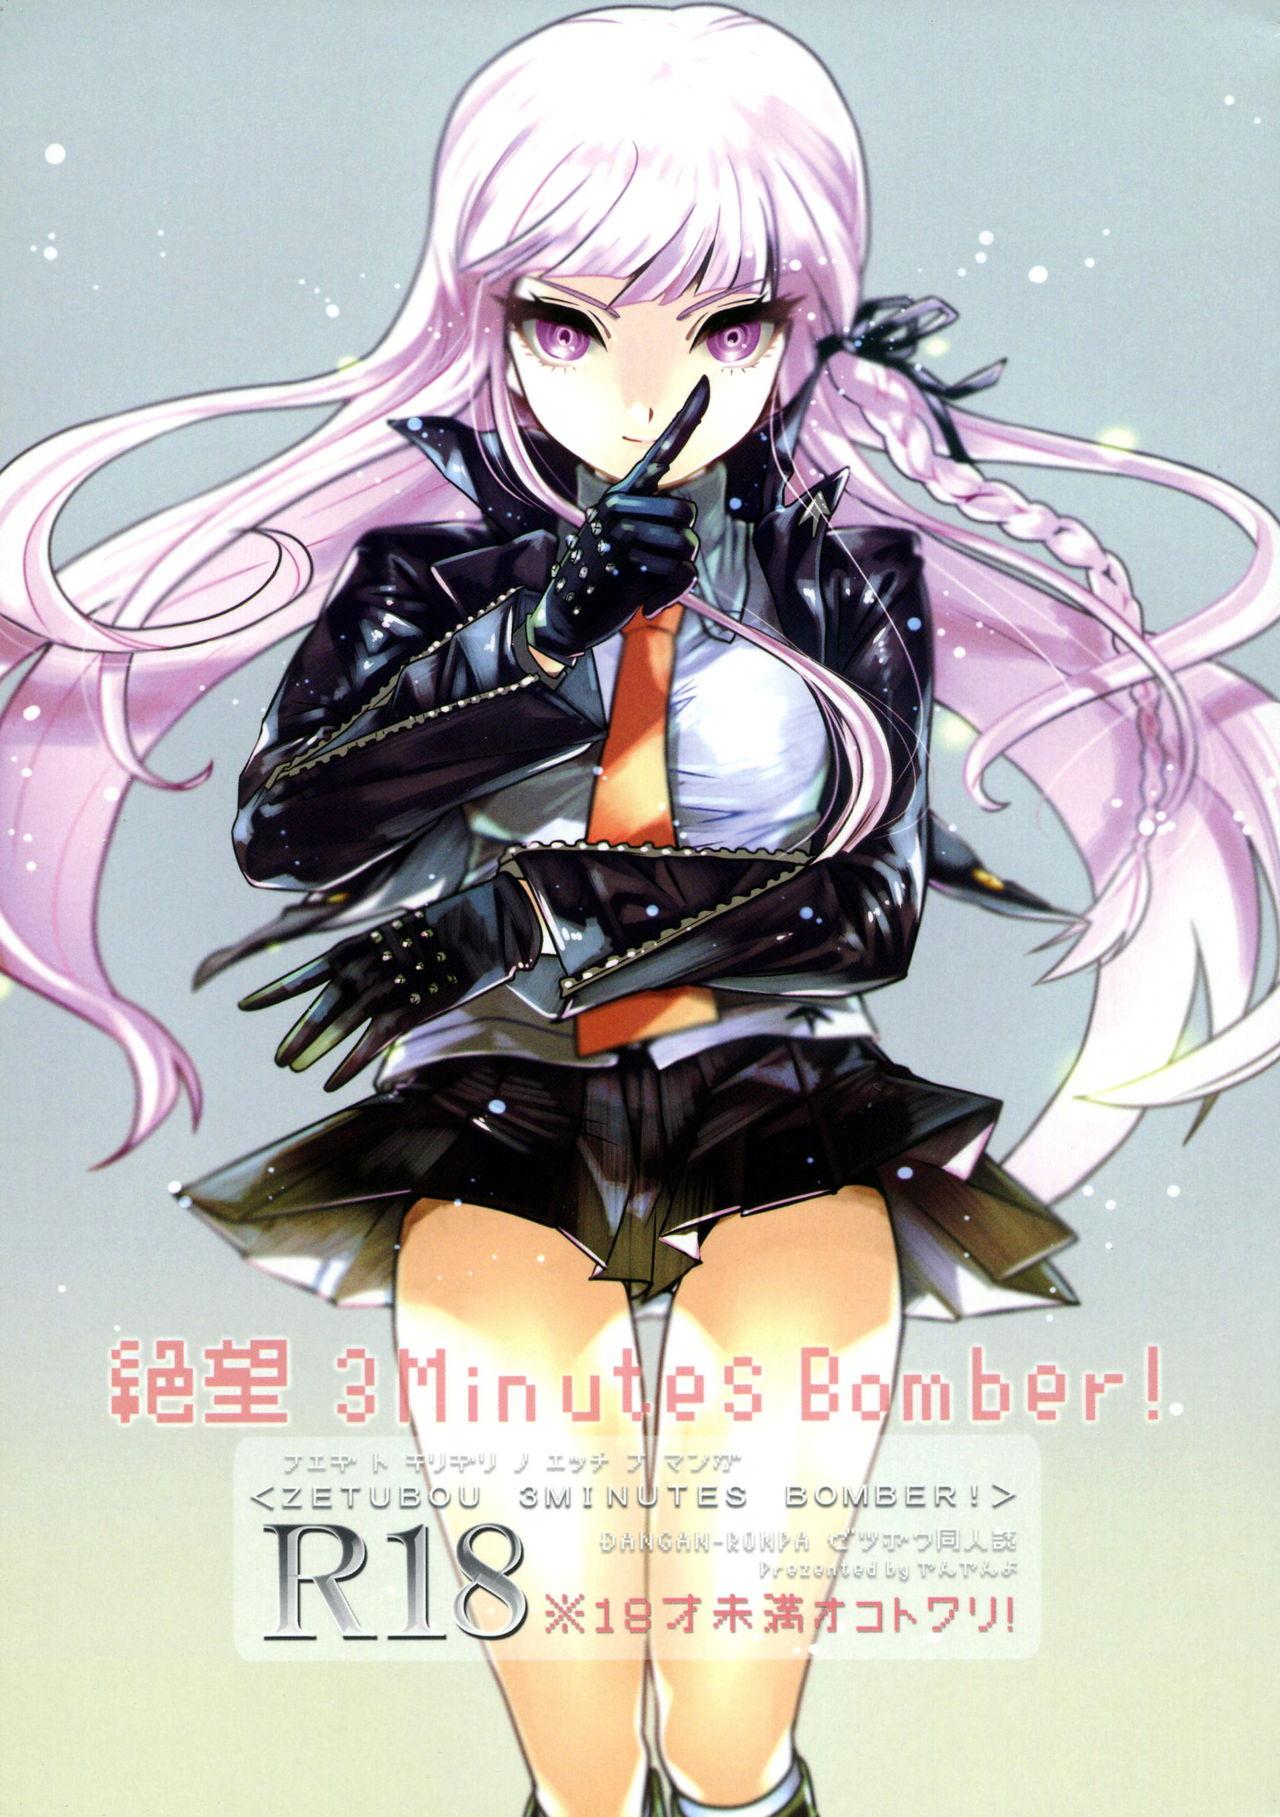 Gagging Zetsubou 3Minutes Bomber! - Danganronpa Comedor - Picture 1